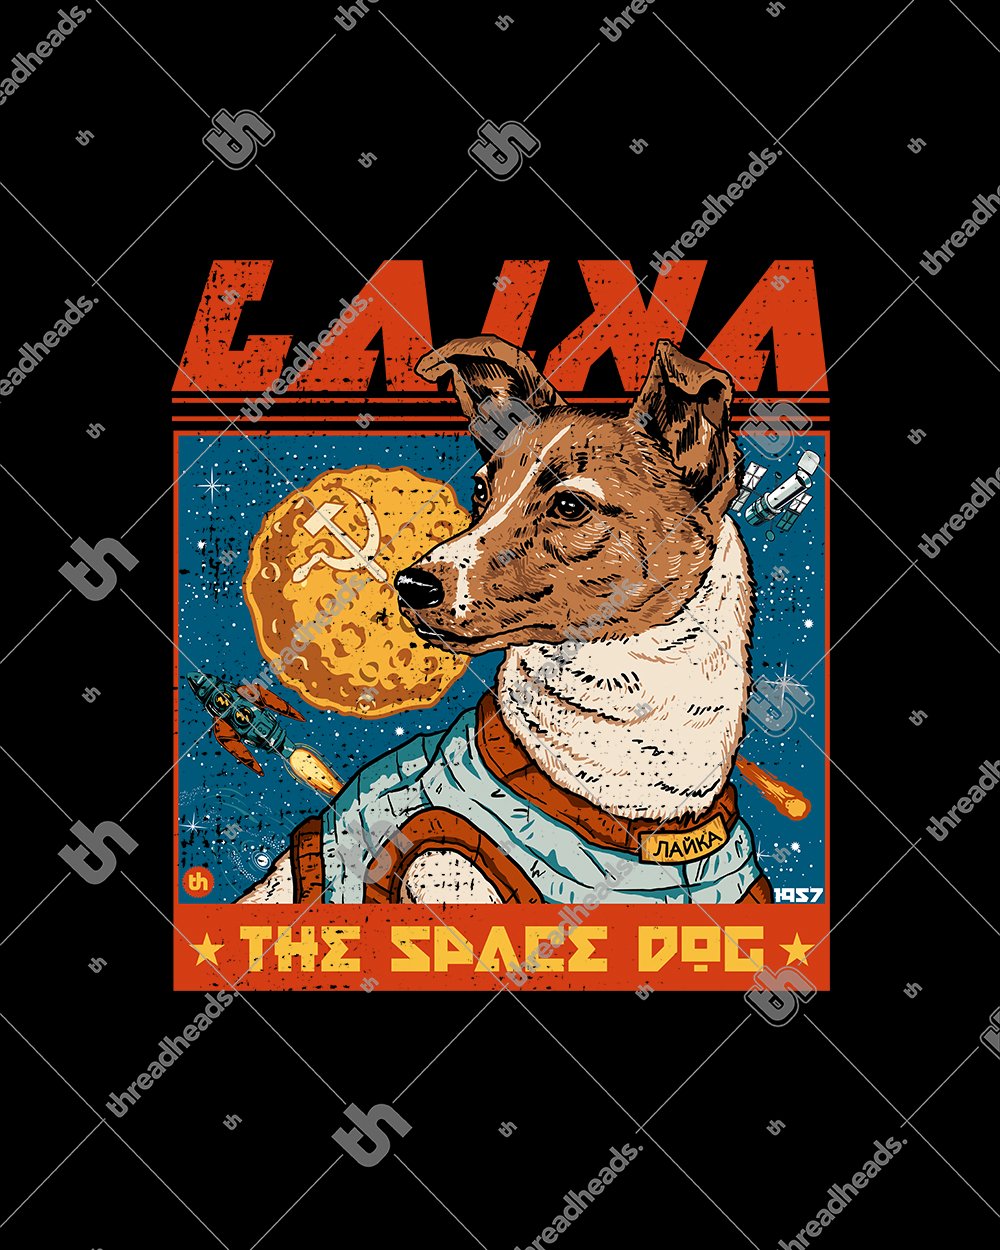 Laika the Space Dog Kids T-Shirt Australia Online #colour_black